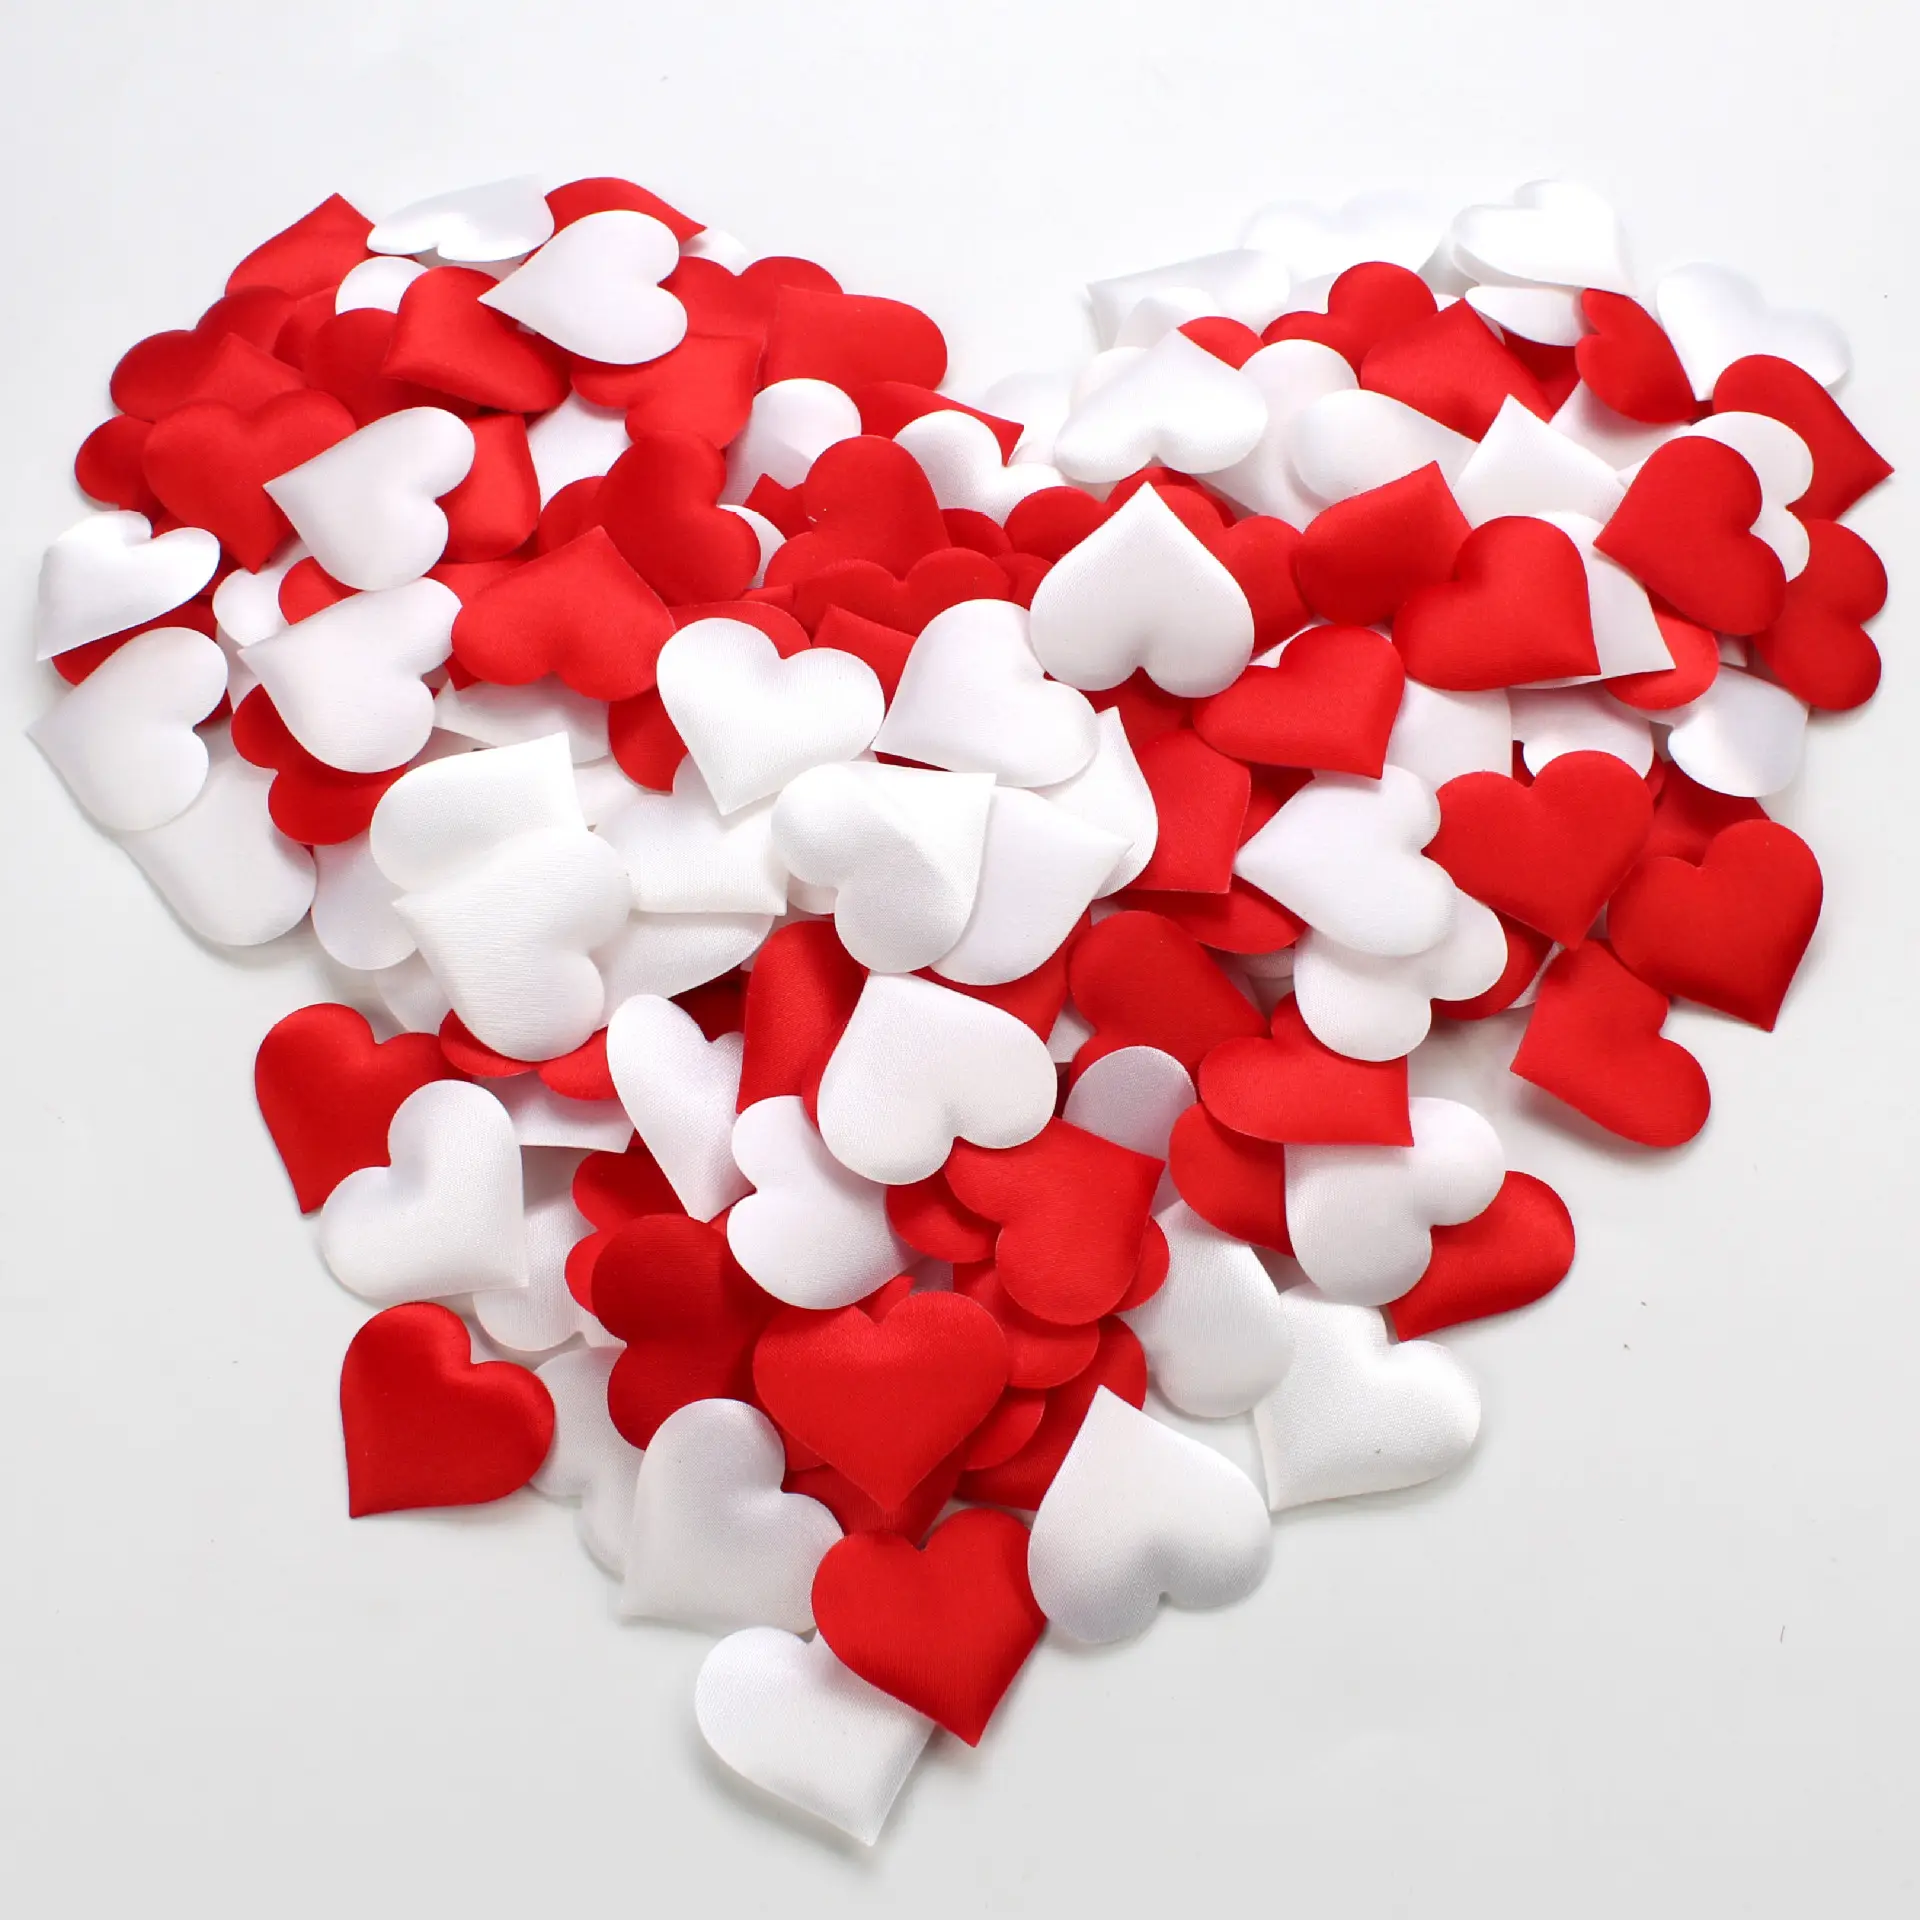 A-1504 بالجملة ديكور حفلات الزفاف اسفنج على شكل قلب وبتلة زائفة قماش ثلاثي الابعاد بيضاء حمراء بتلات اصطناعية